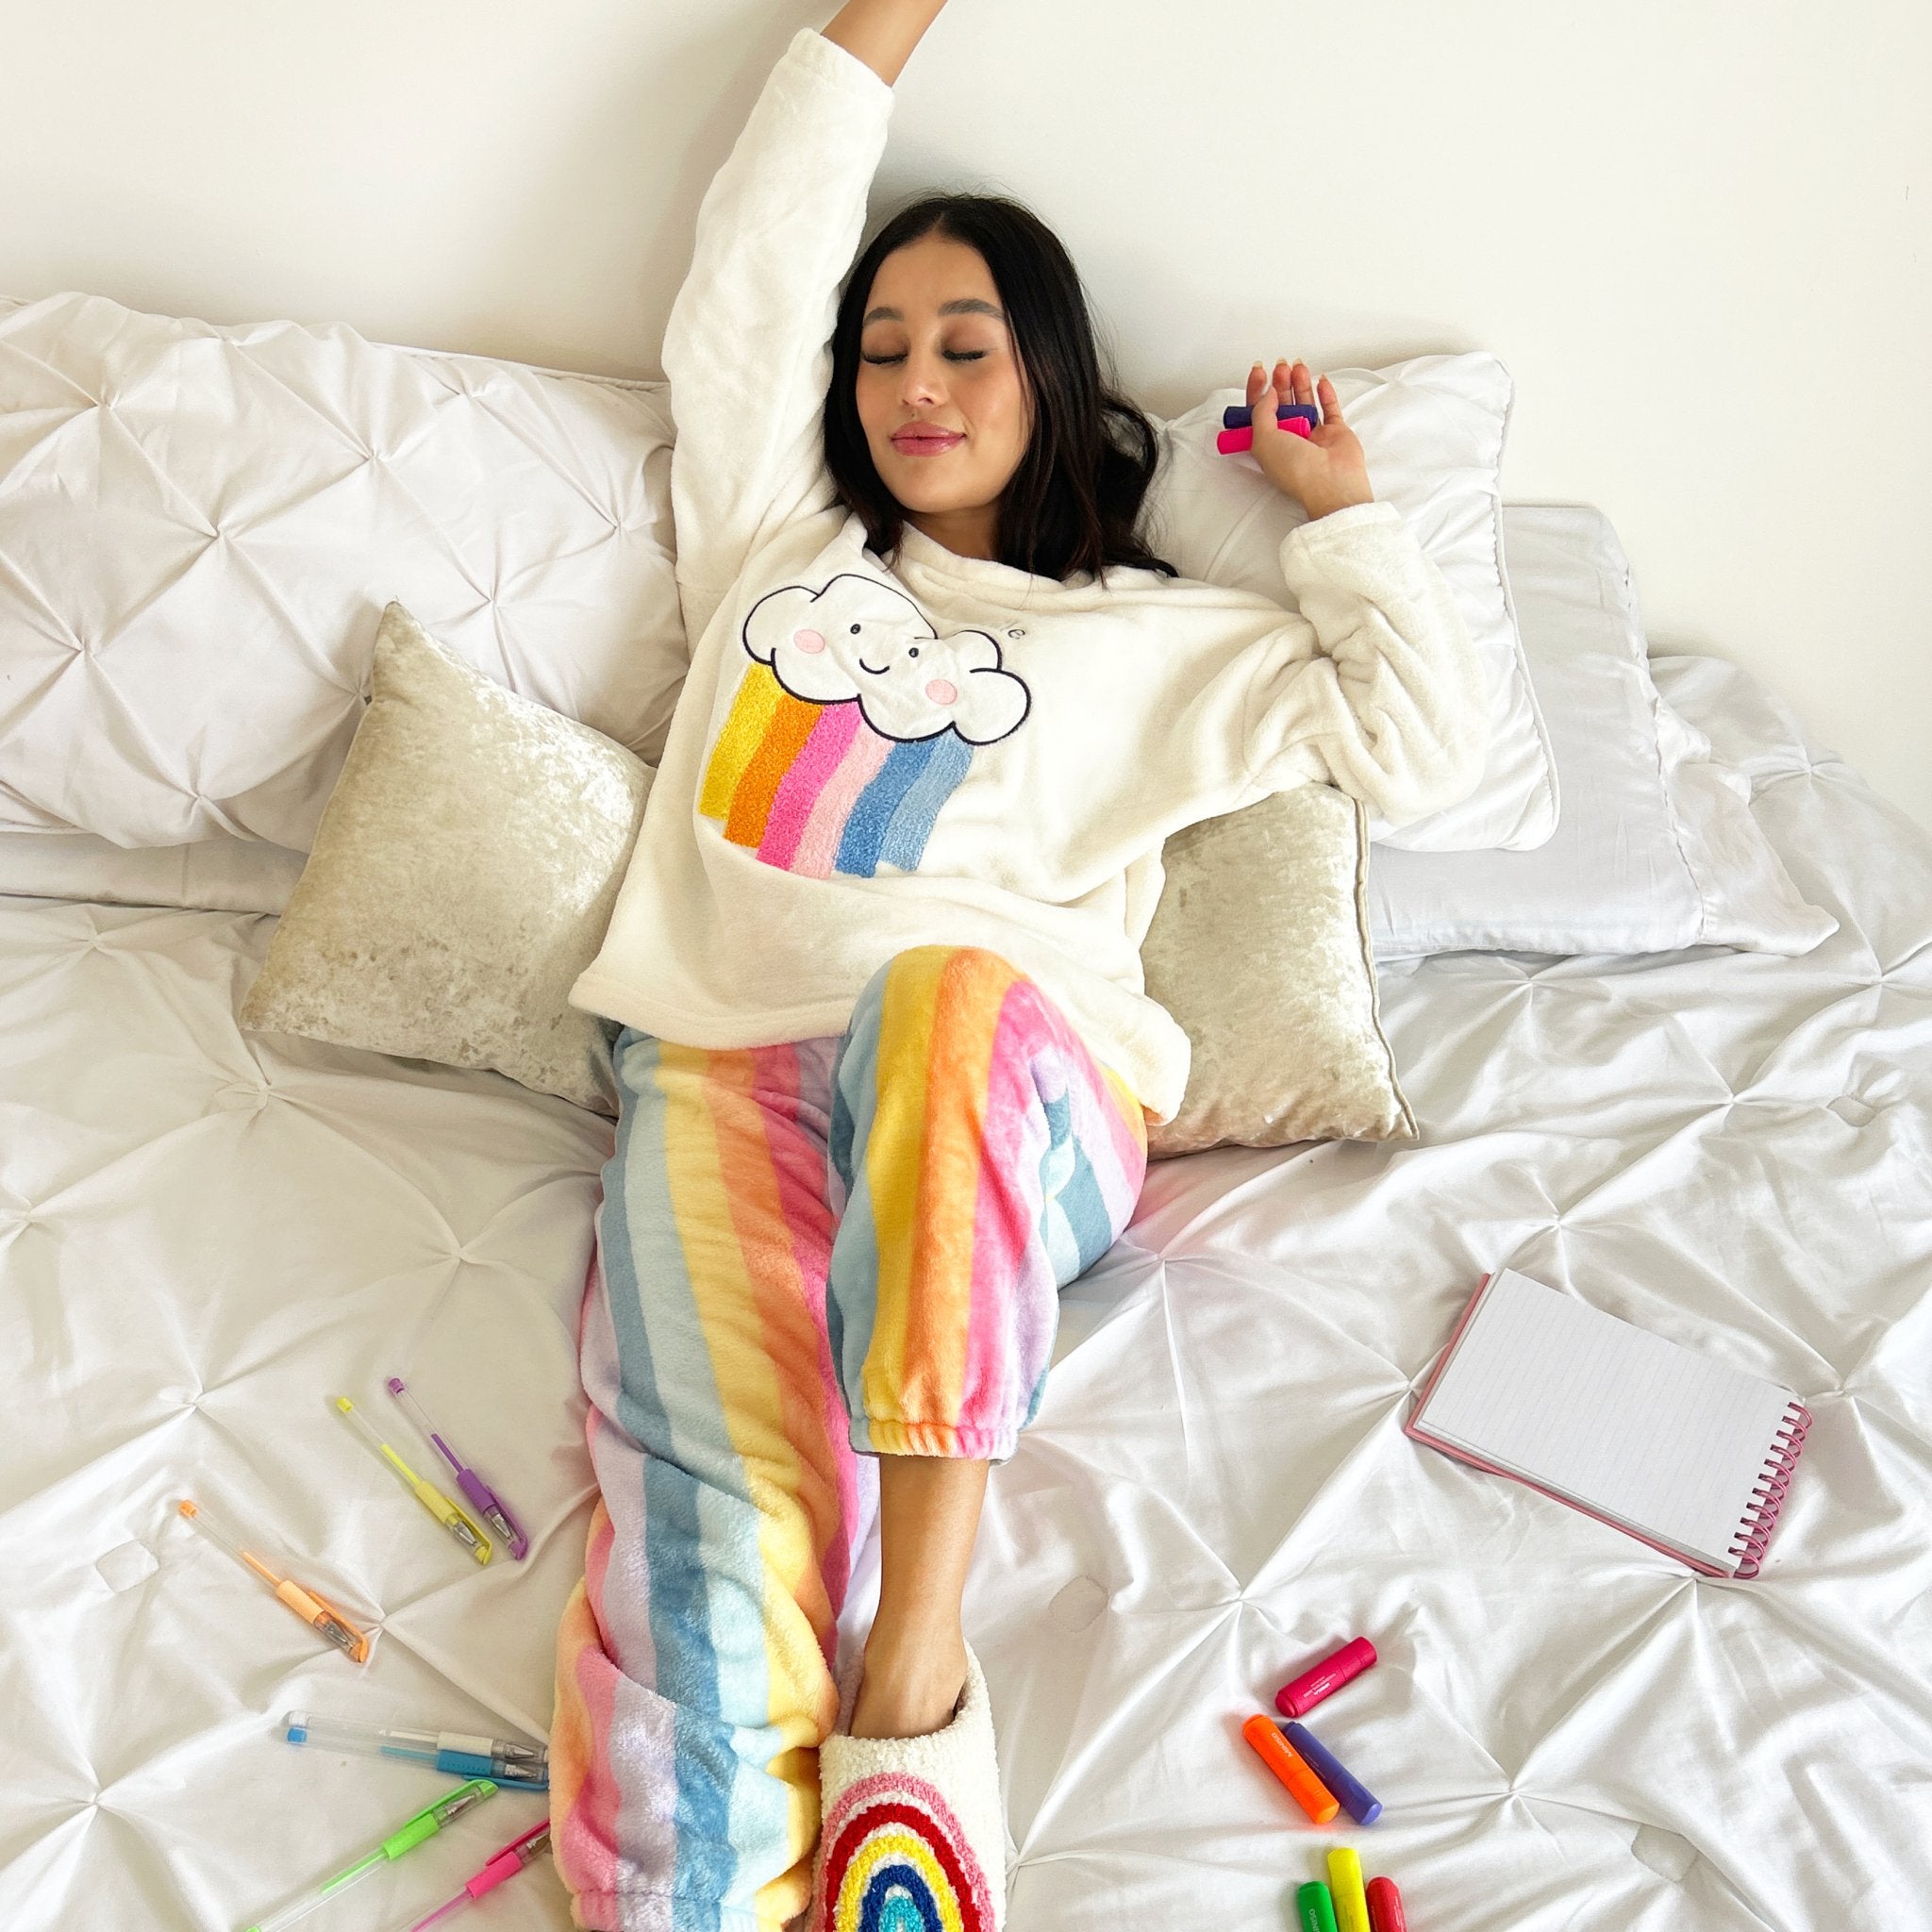 Pijama 2 Piezas Polar Arcoiris - Sticky Bra #brasier_sin_espalda# #brasier_para_escotes# #brasier_para_vestido# #brasier_strapless# #brasier_adhesivo# #brasier_adherente# #brasier_de_silicon# #brasier_escot